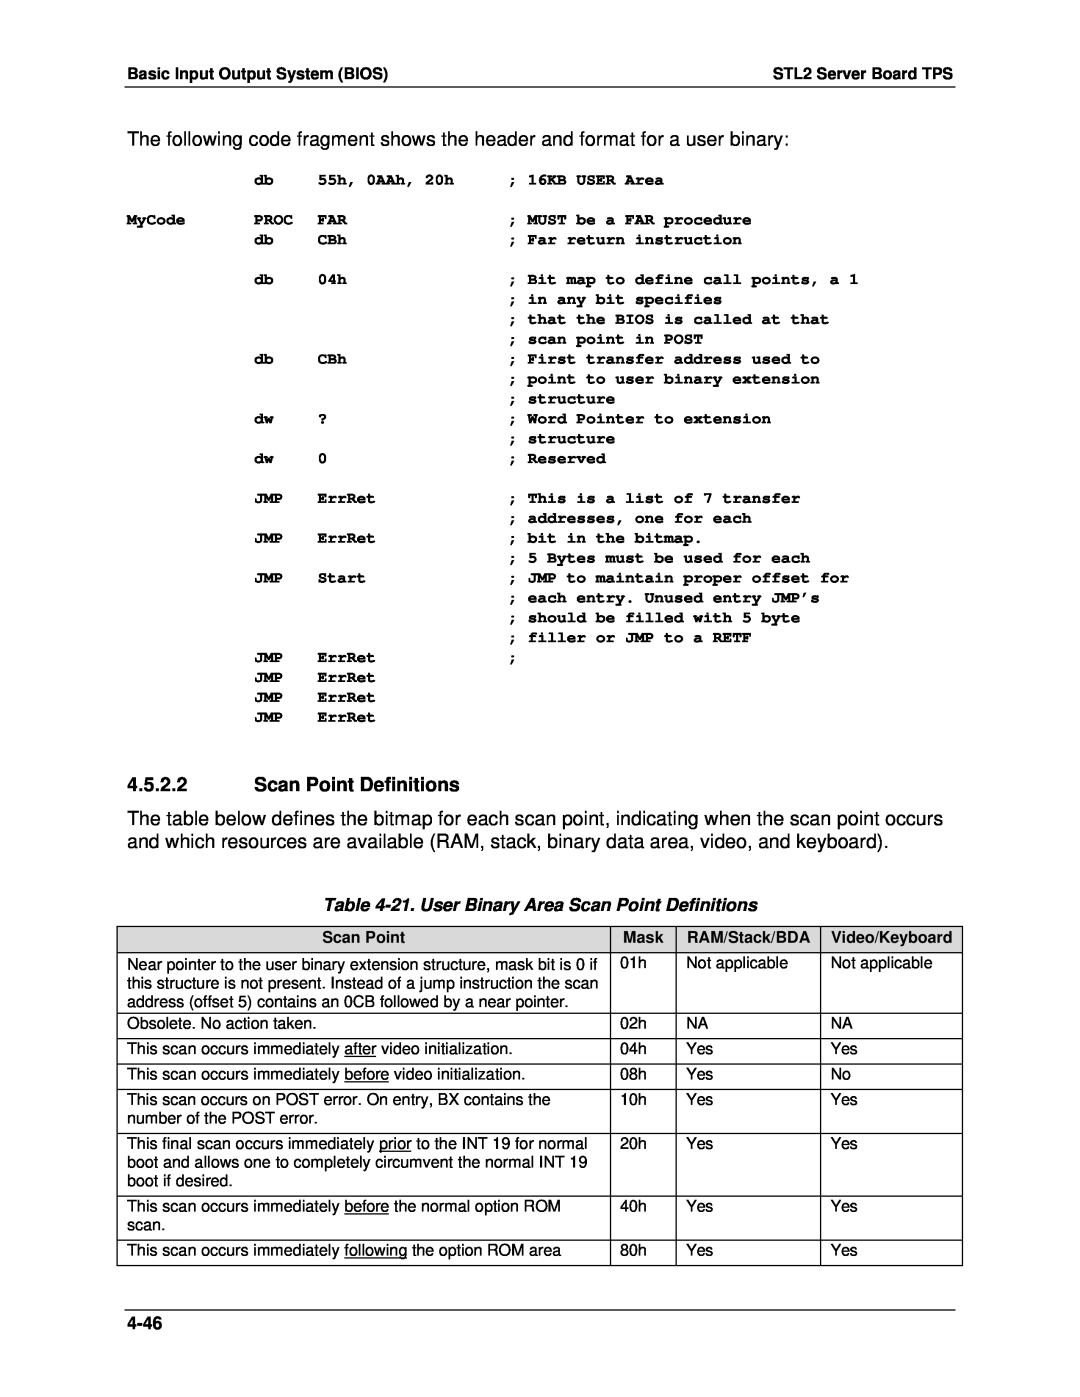 Intel manual 4.5.2.2Scan Point Definitions, Basic Input Output System BIOS, STL2 Server Board TPS, Mask, RAM/Stack/BDA 